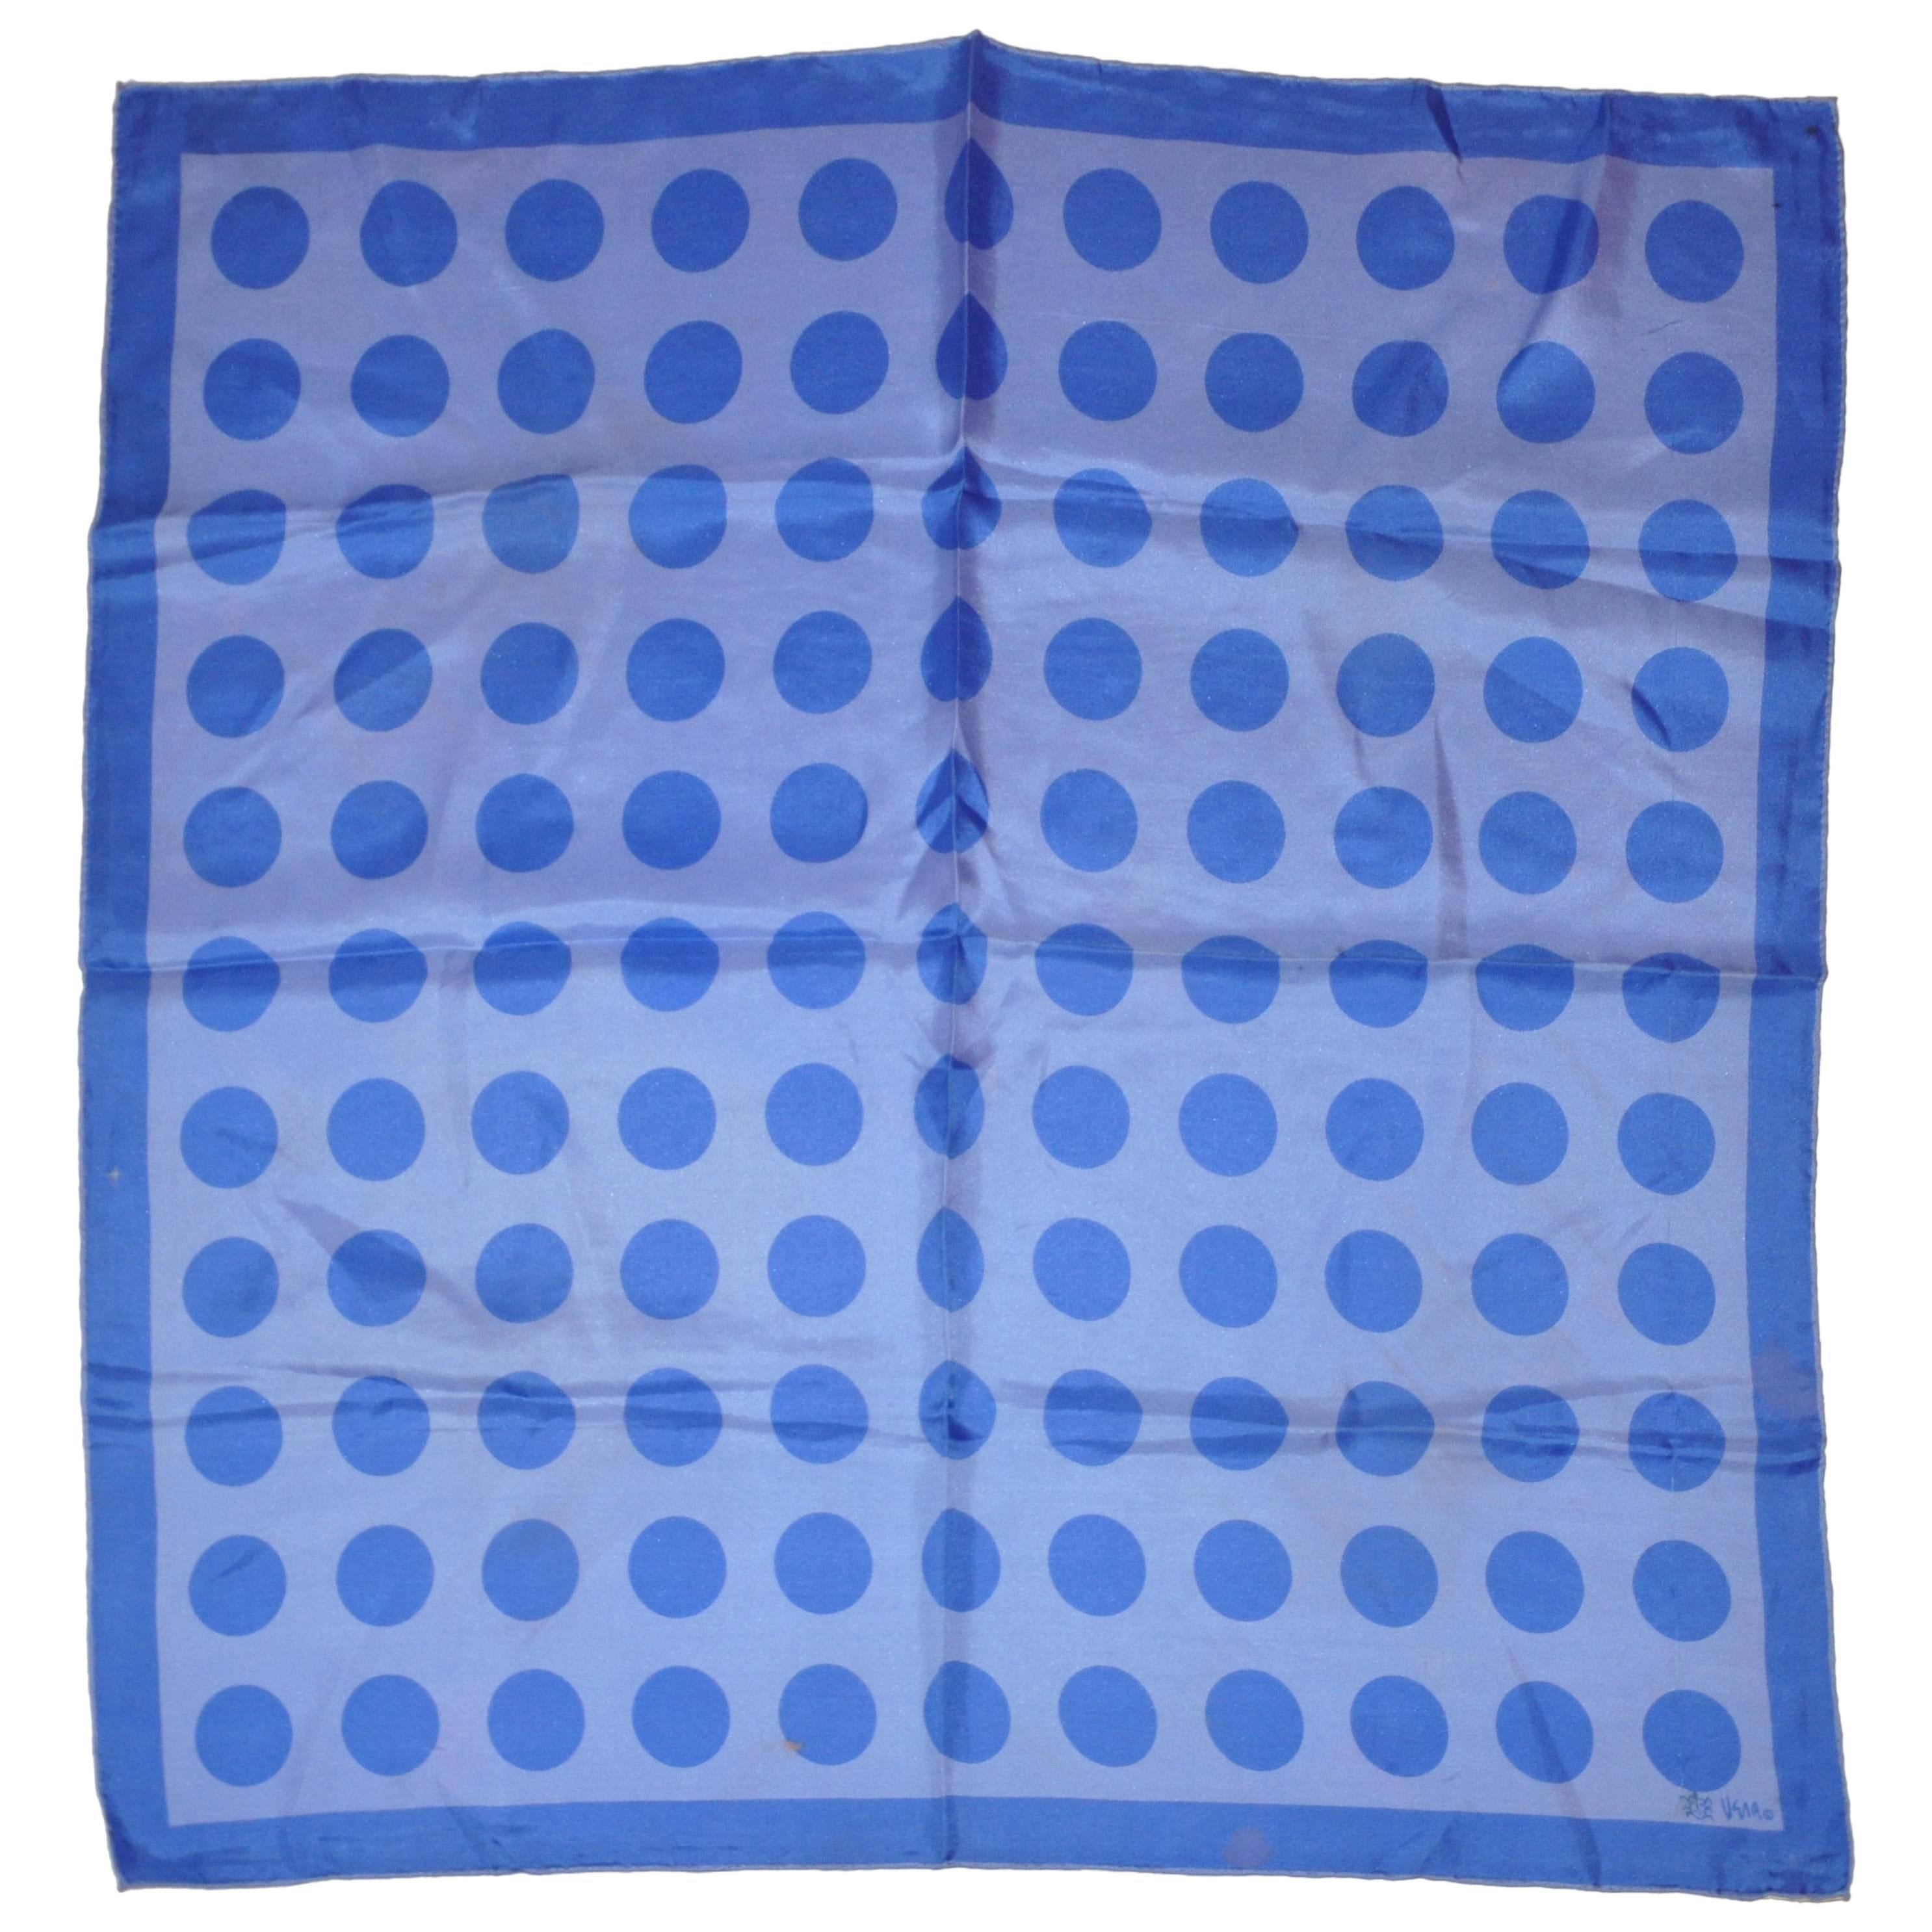 Vera for Bonwit Teller Lavender & Blue Polka Dots Silk Scarf For Sale